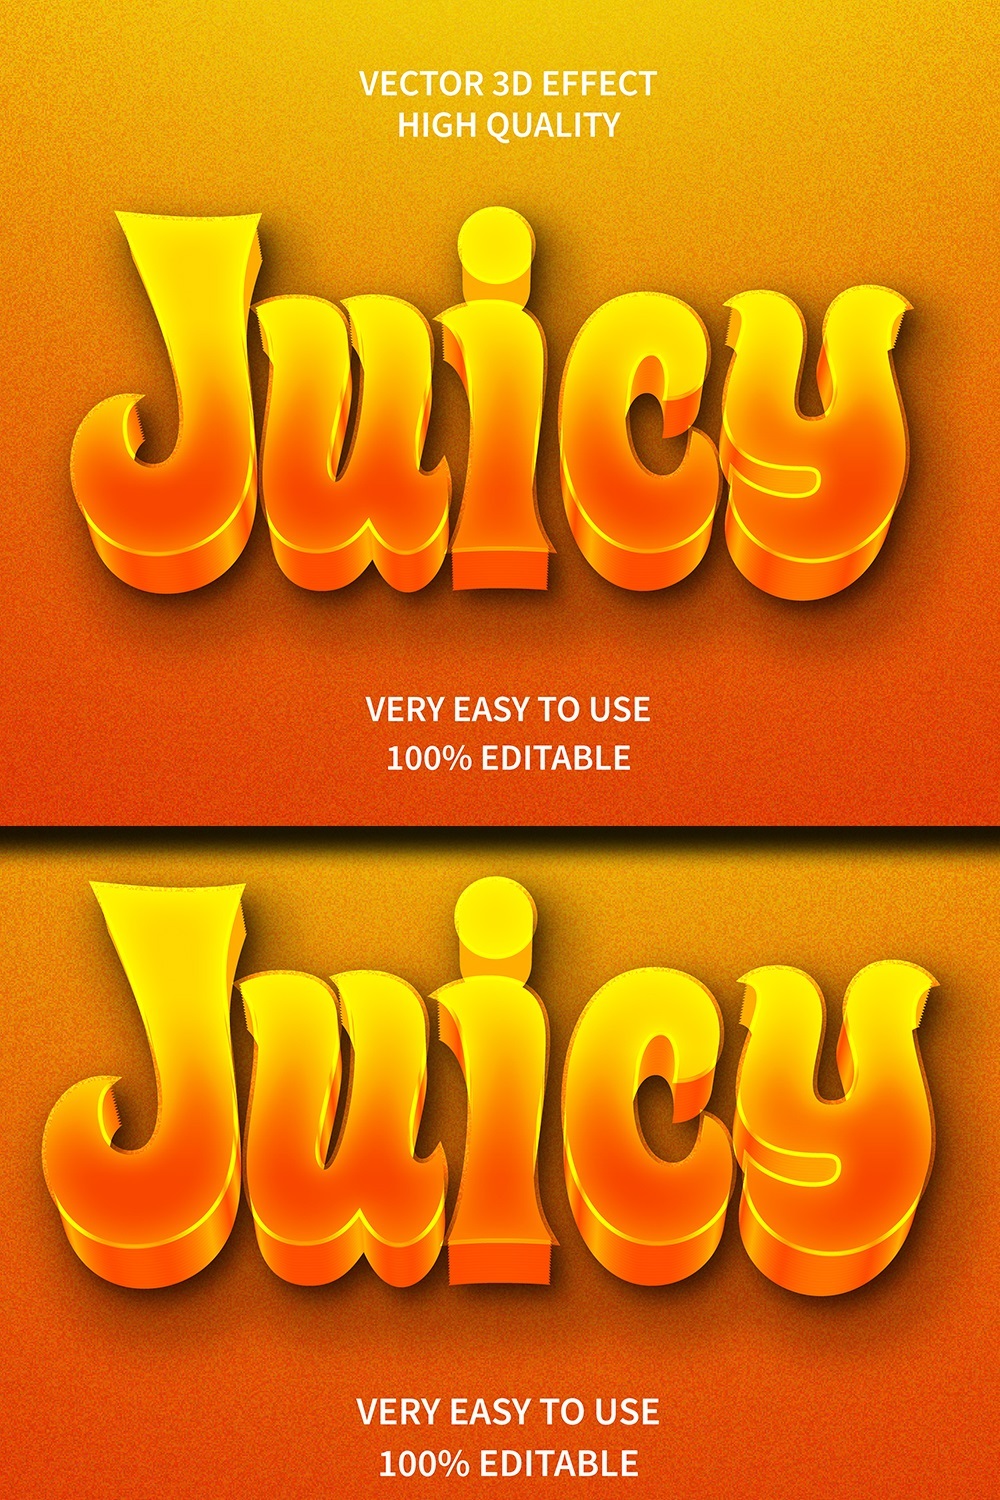 Juicy Editable 3D text Effect Vector pinterest preview image.